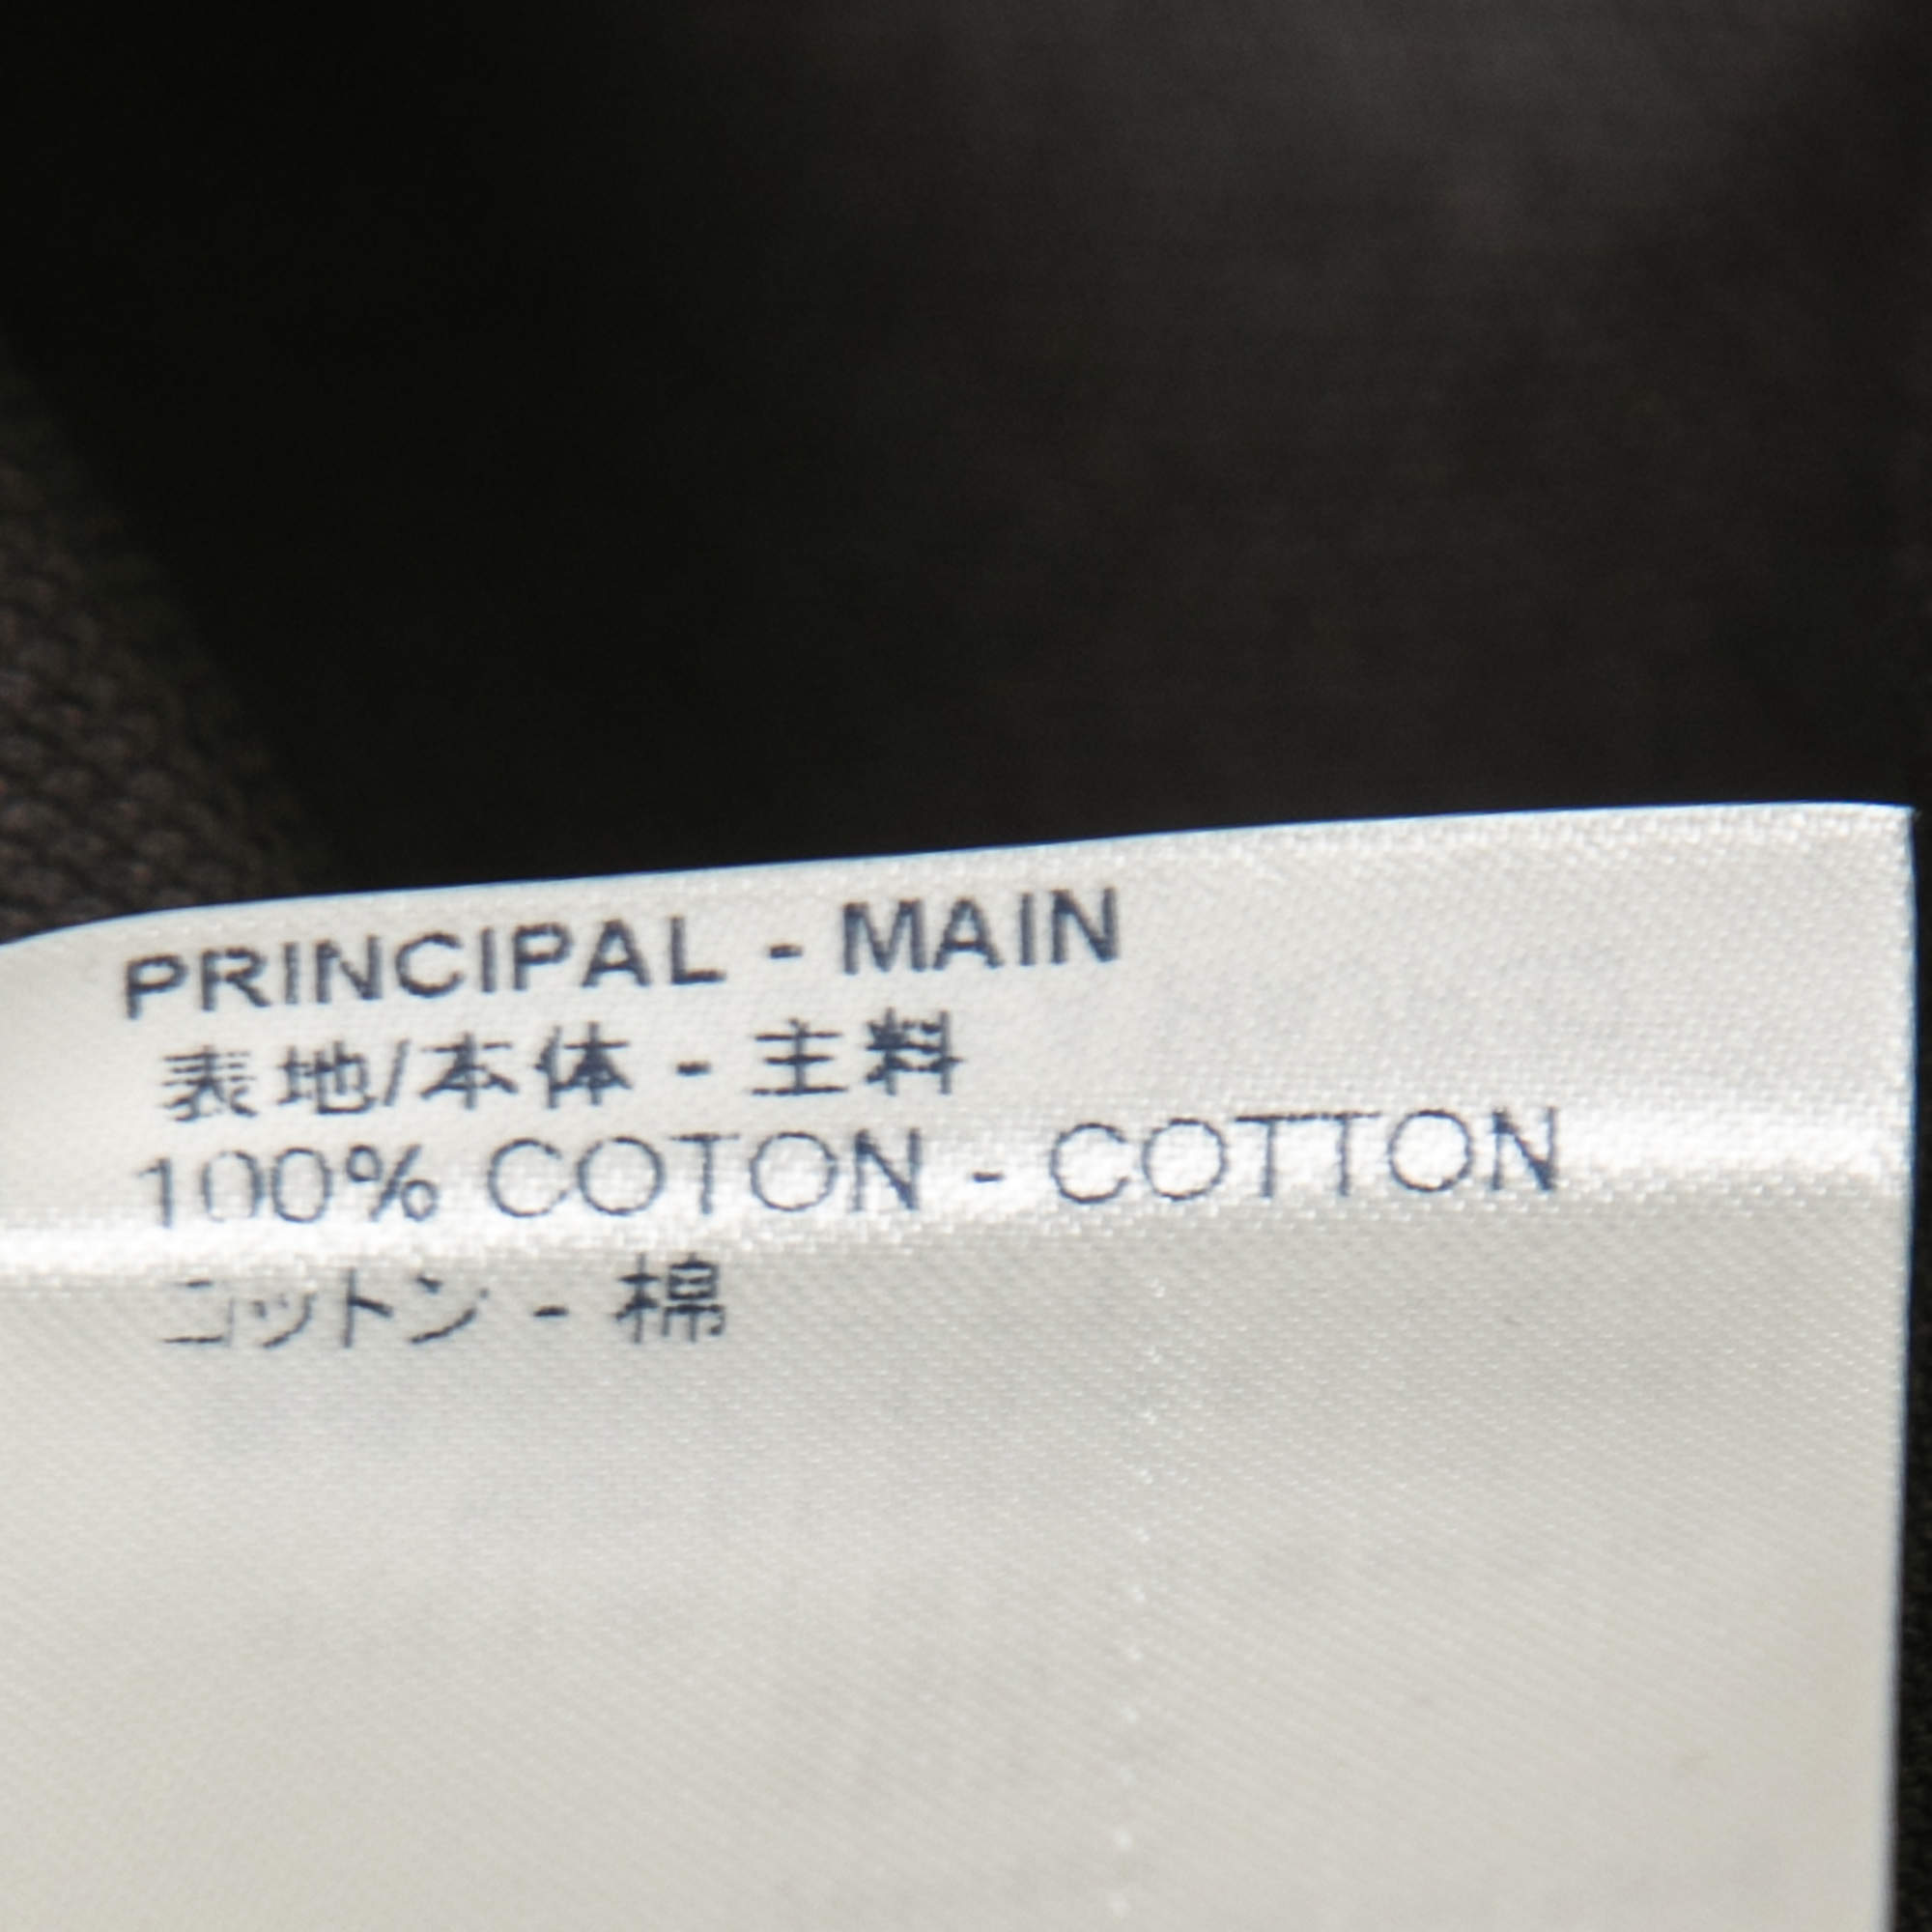 Polo shirt Louis Vuitton Black size S International in Cotton - 30177915